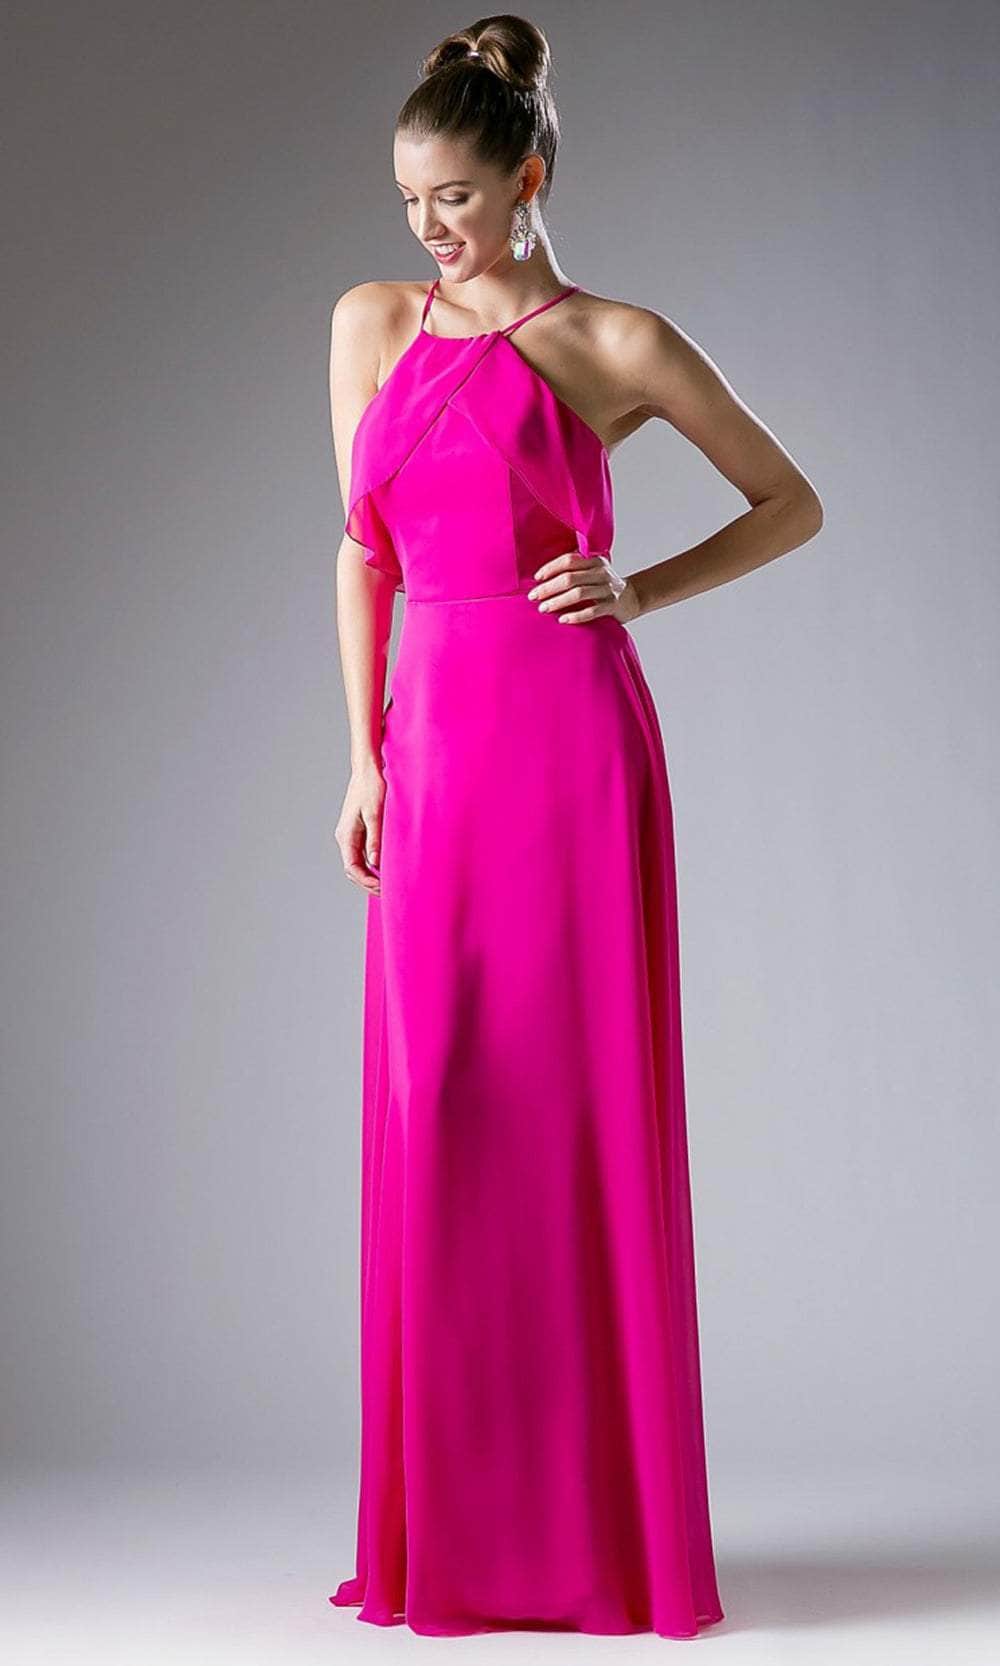 Cinderella Divine 13032 - Simple Thin Strapped Halter Dress Special Occasion Dress 4 / Fuchsia